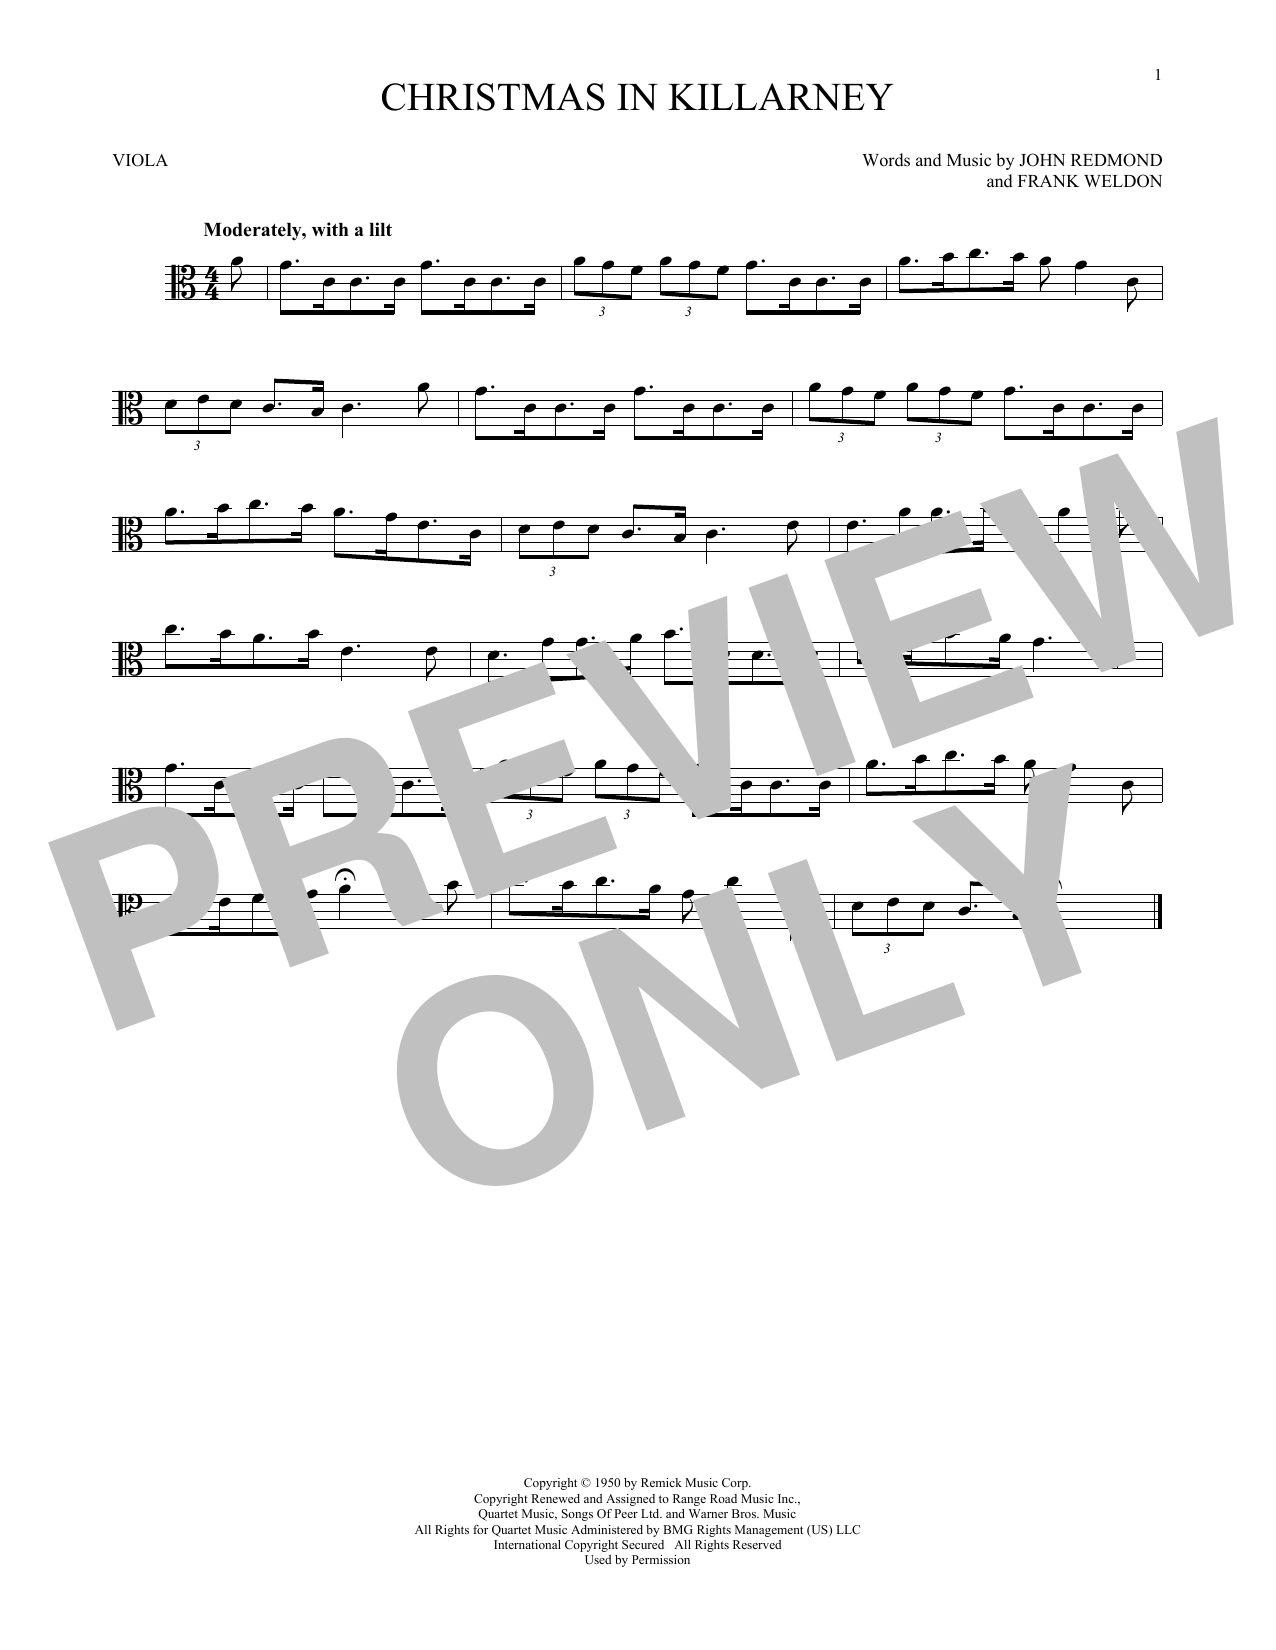 John Redmond & Frank Weldon Christmas In Killarney Sheet Music Notes & Chords for Tenor Sax Solo - Download or Print PDF